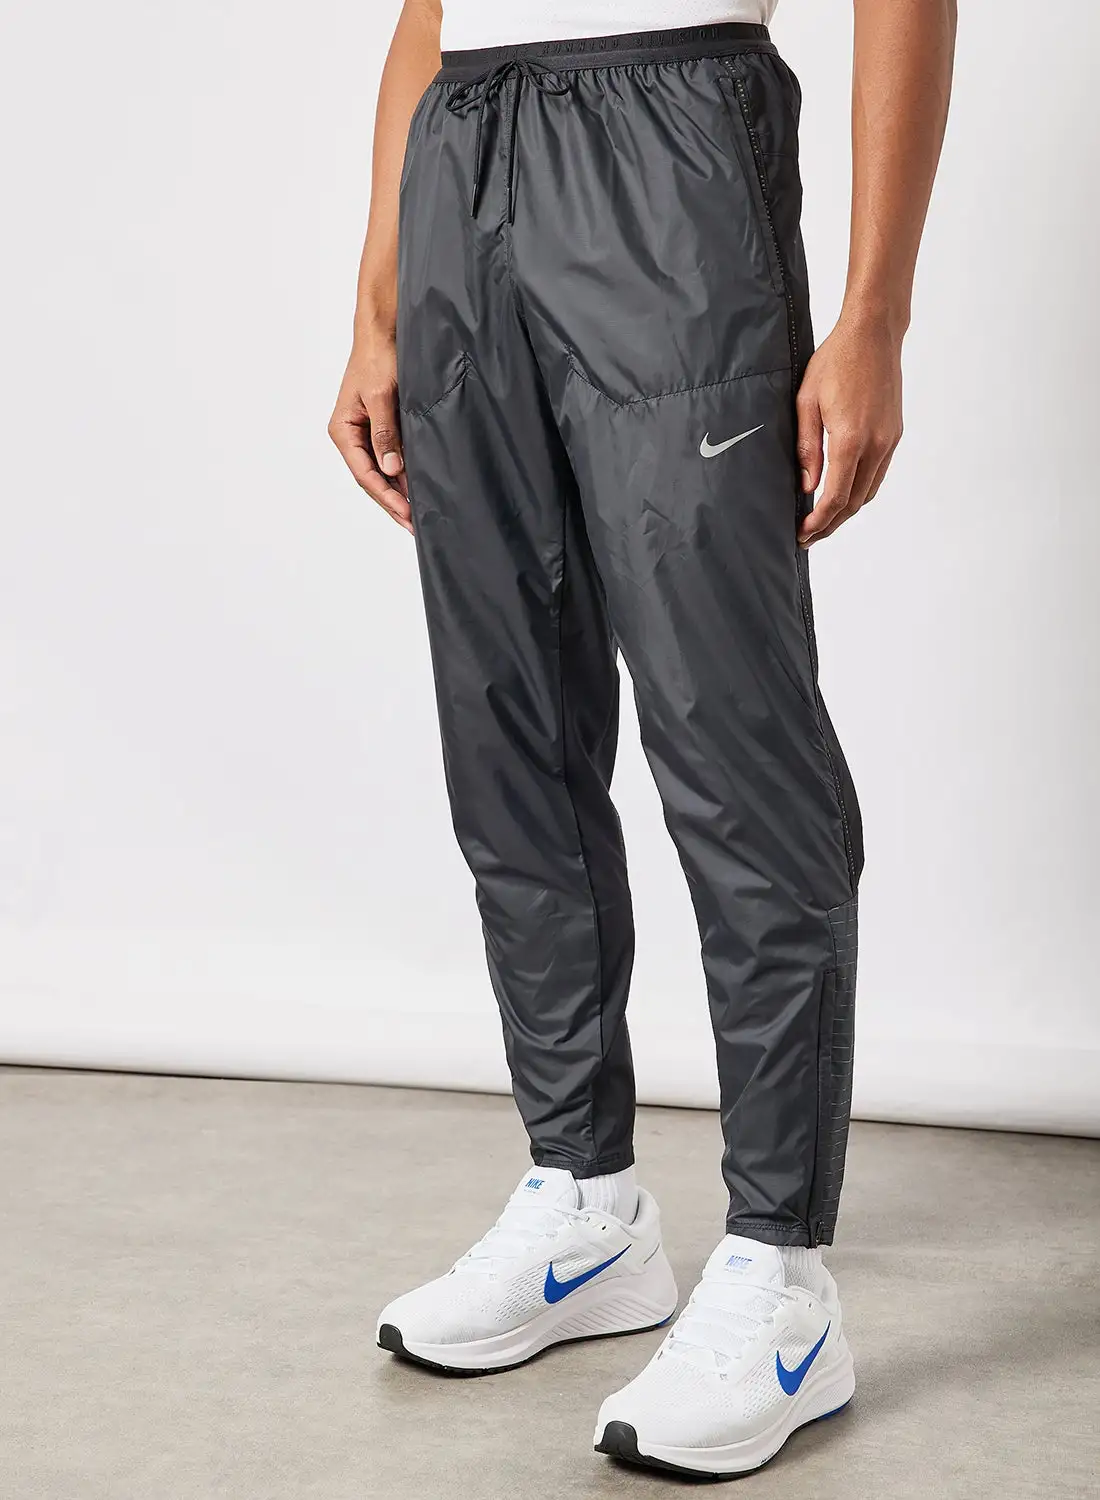 Nike Storm Fit Run Division Phenom Elite Flash Pants Black